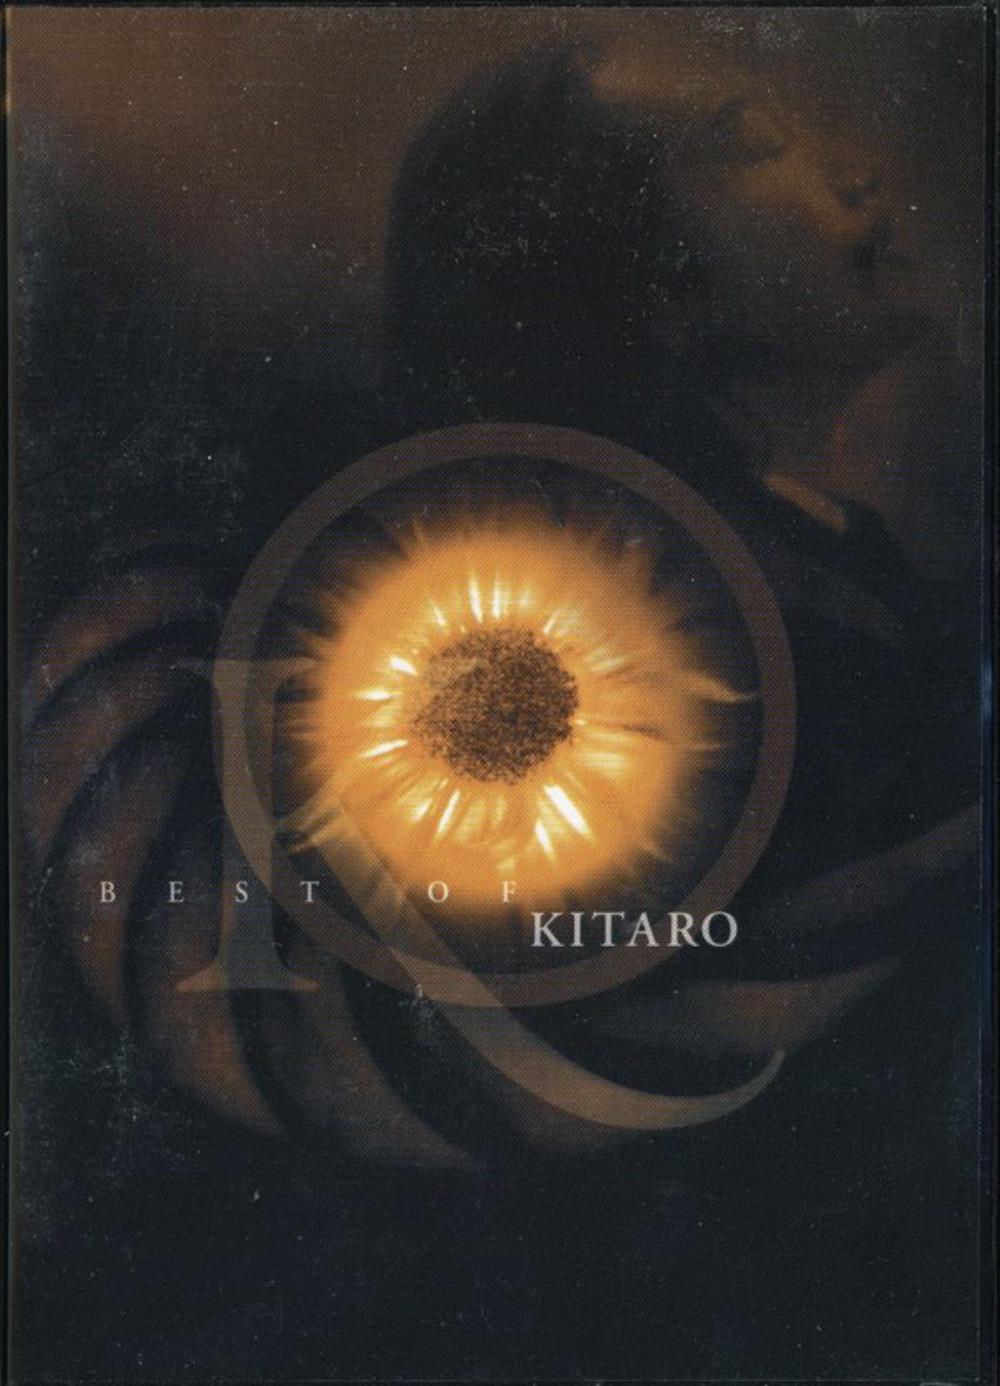 Kitaro - The Best of Kitaro CD (album) cover